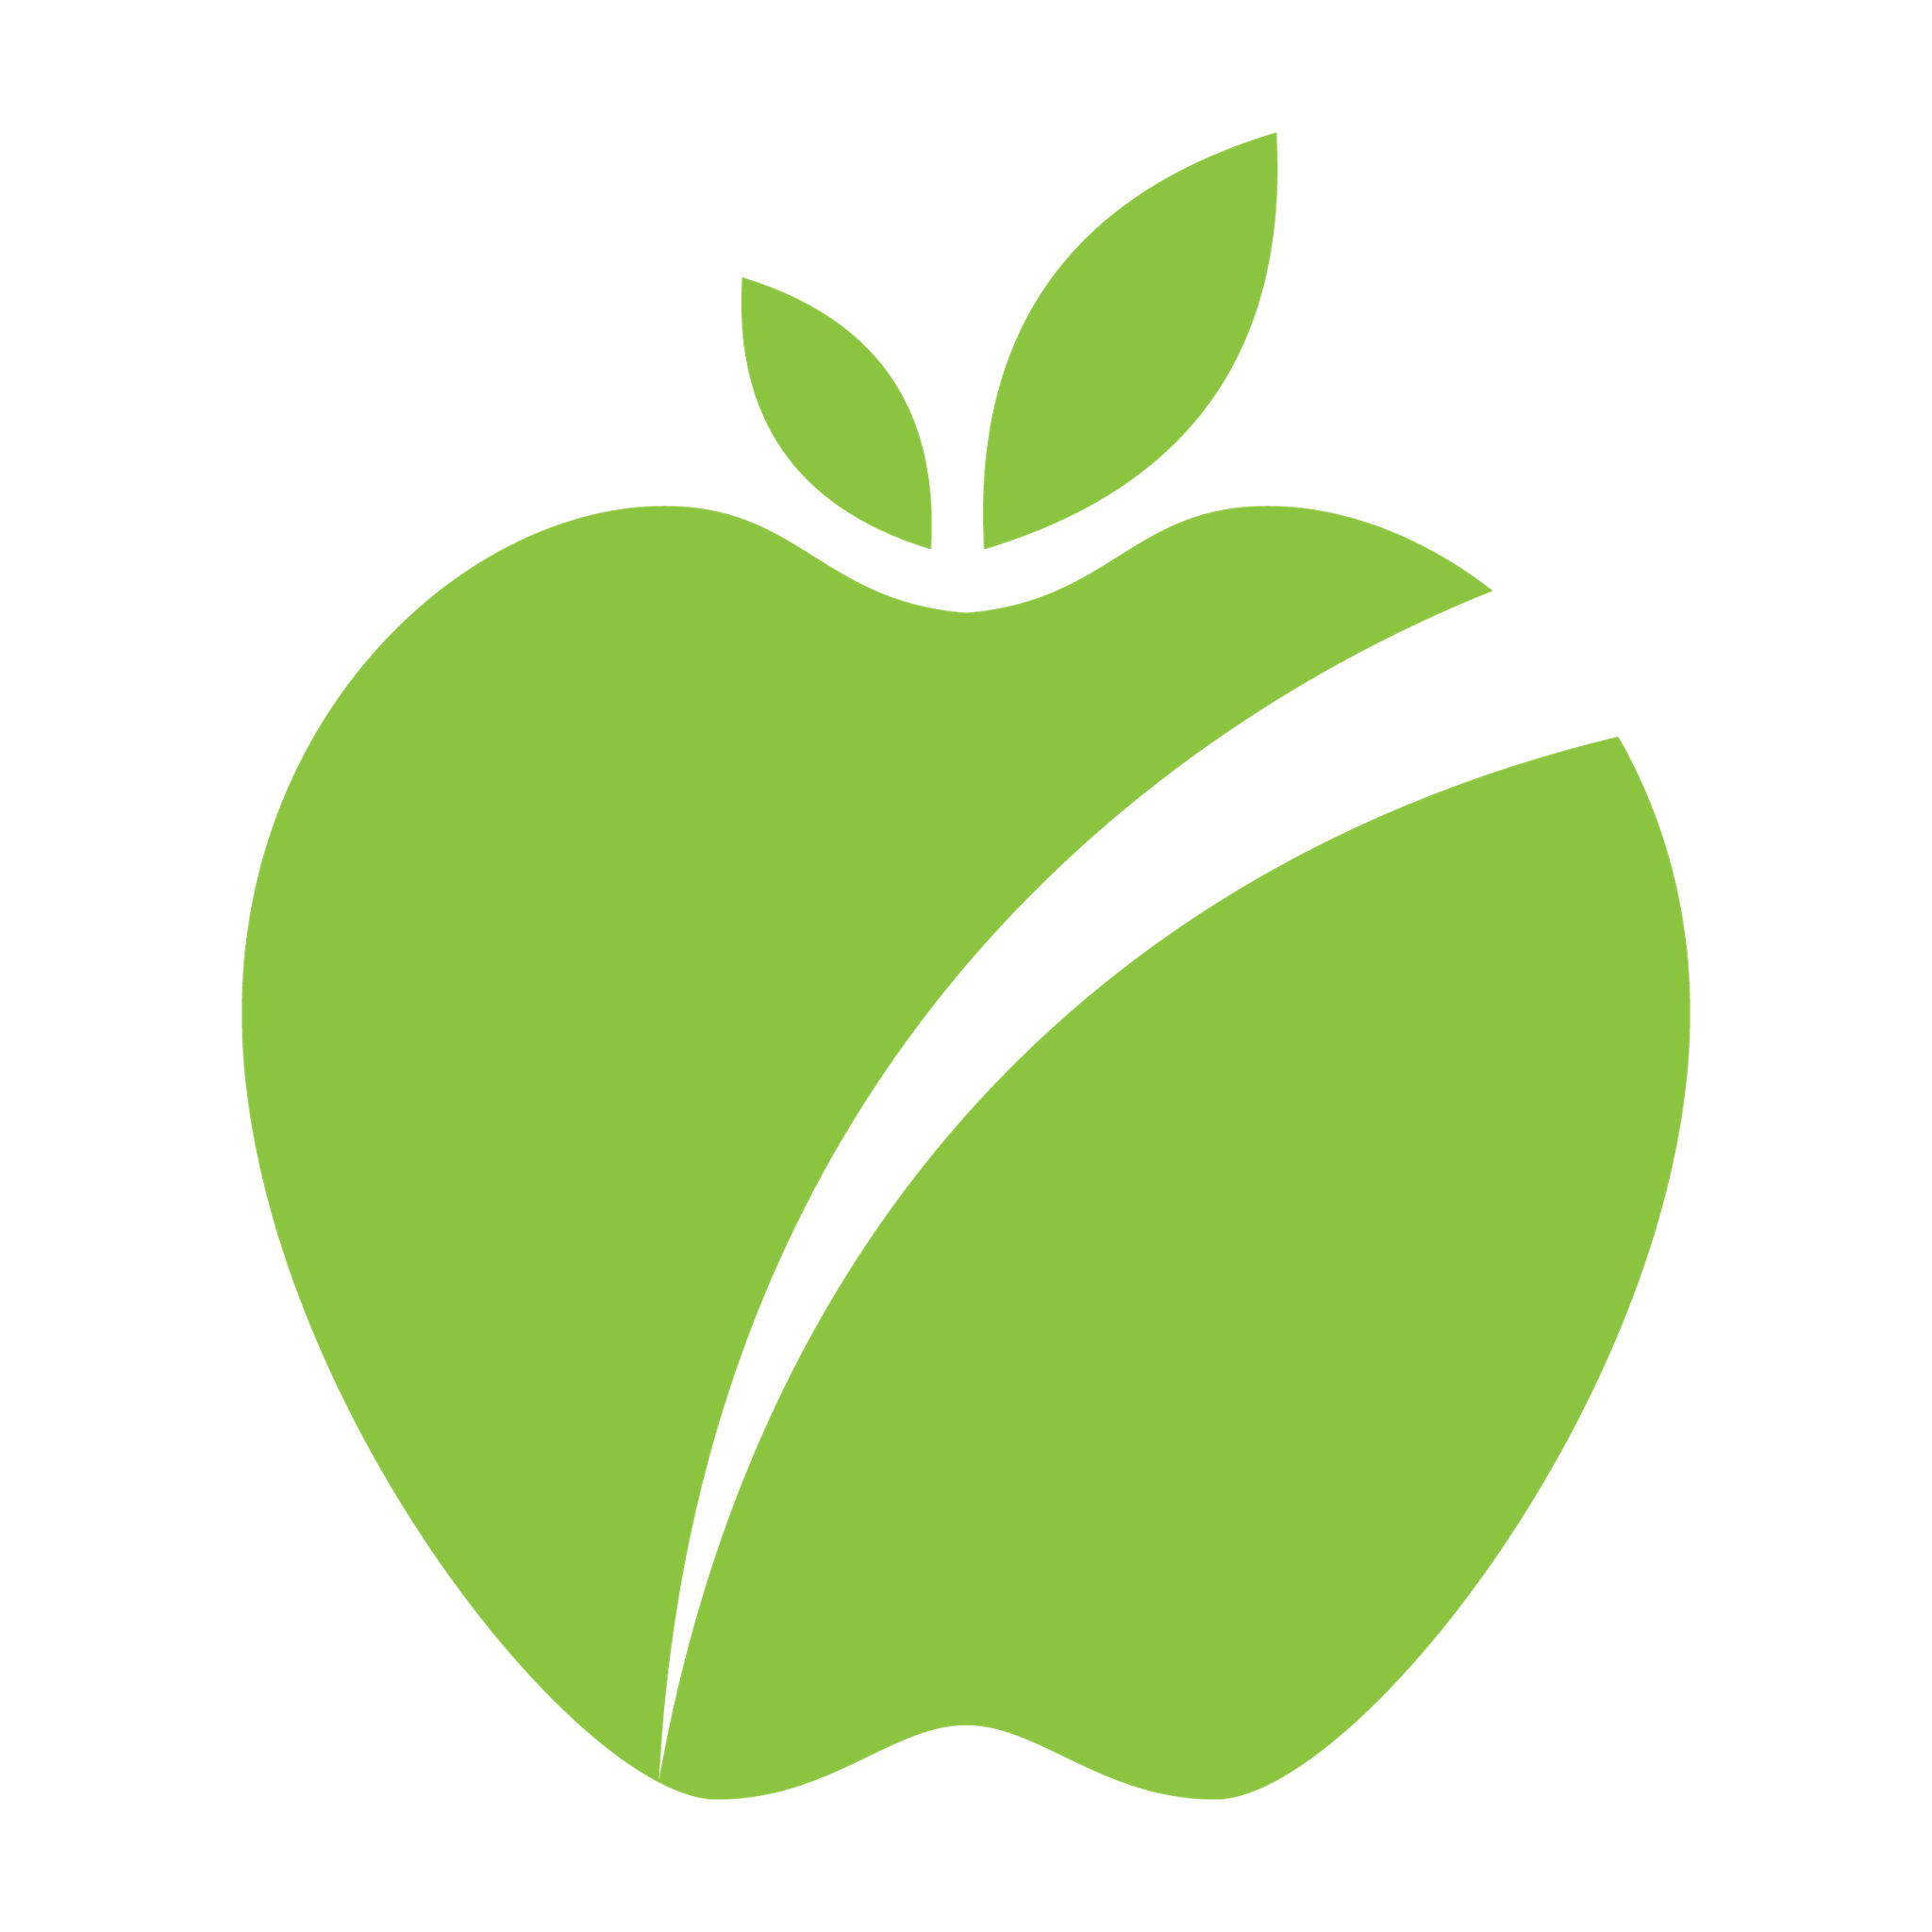 Green Apple Imagine - About - Google+